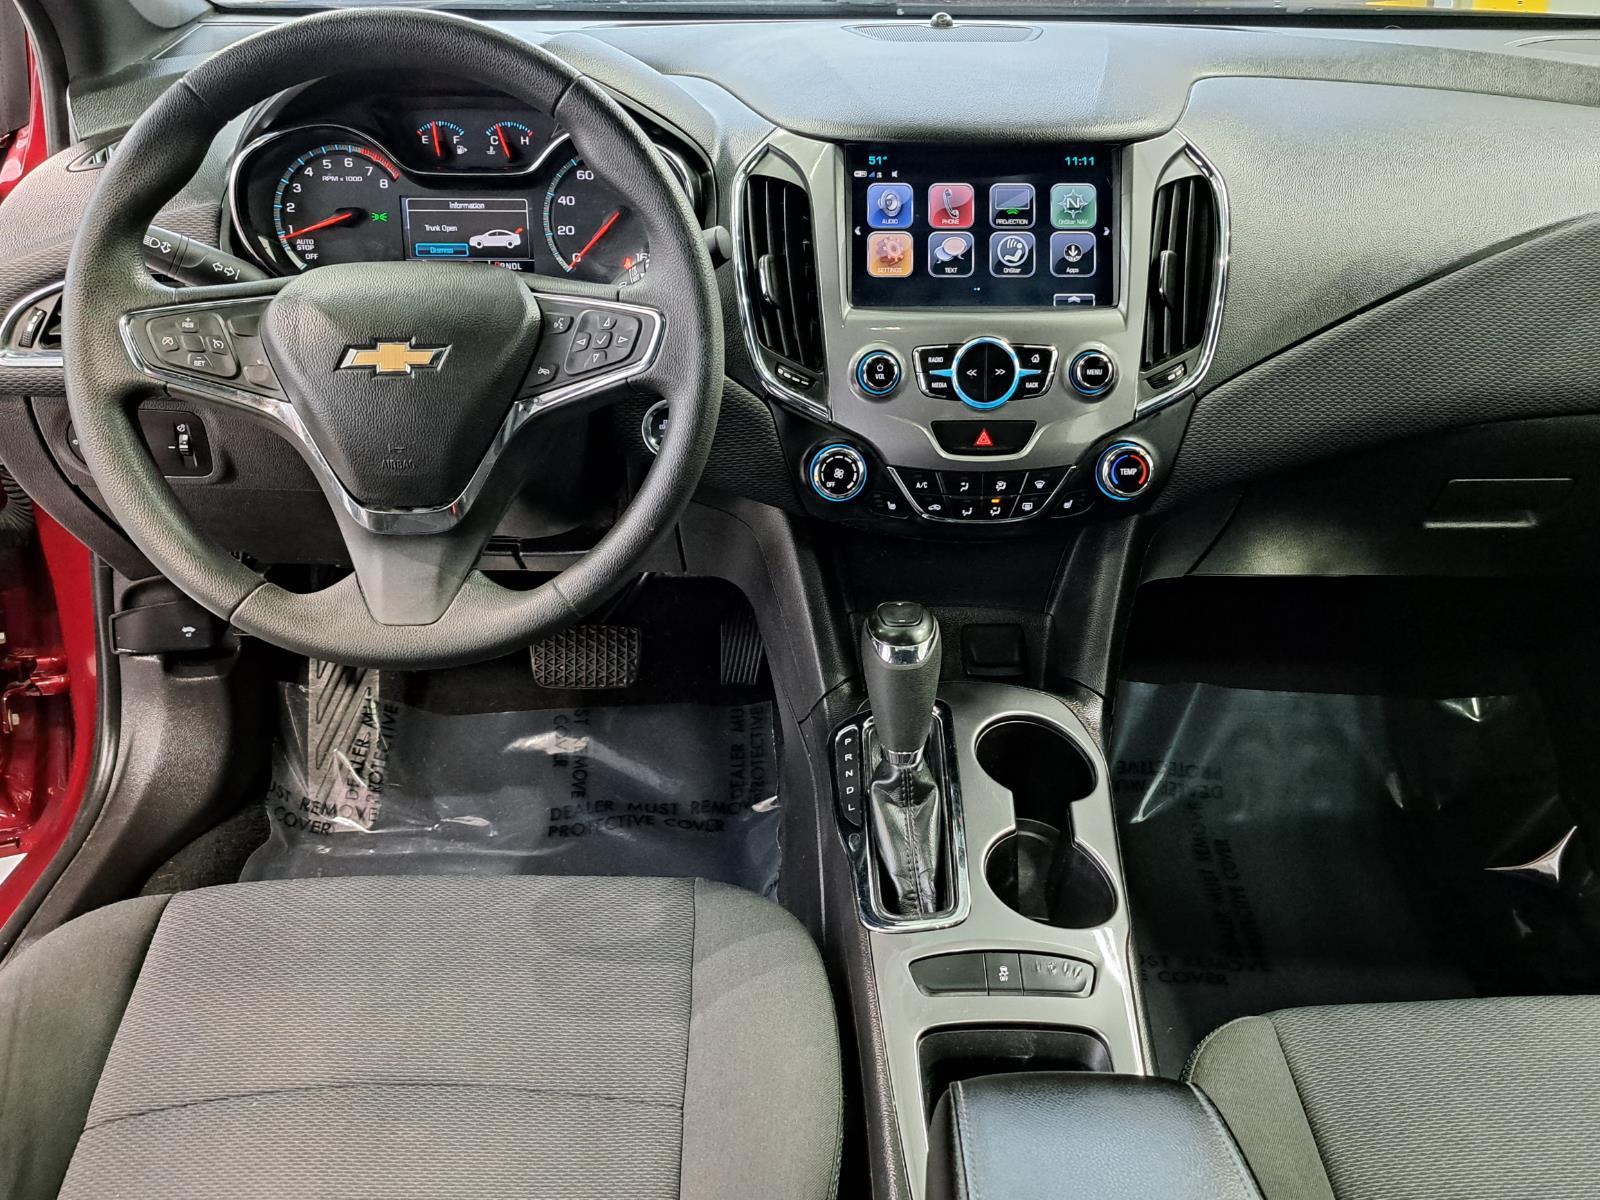 2017 Chevrolet Cruze LT Sedan 4 Dr. Front Wheel Drive mobile thumbnail 28